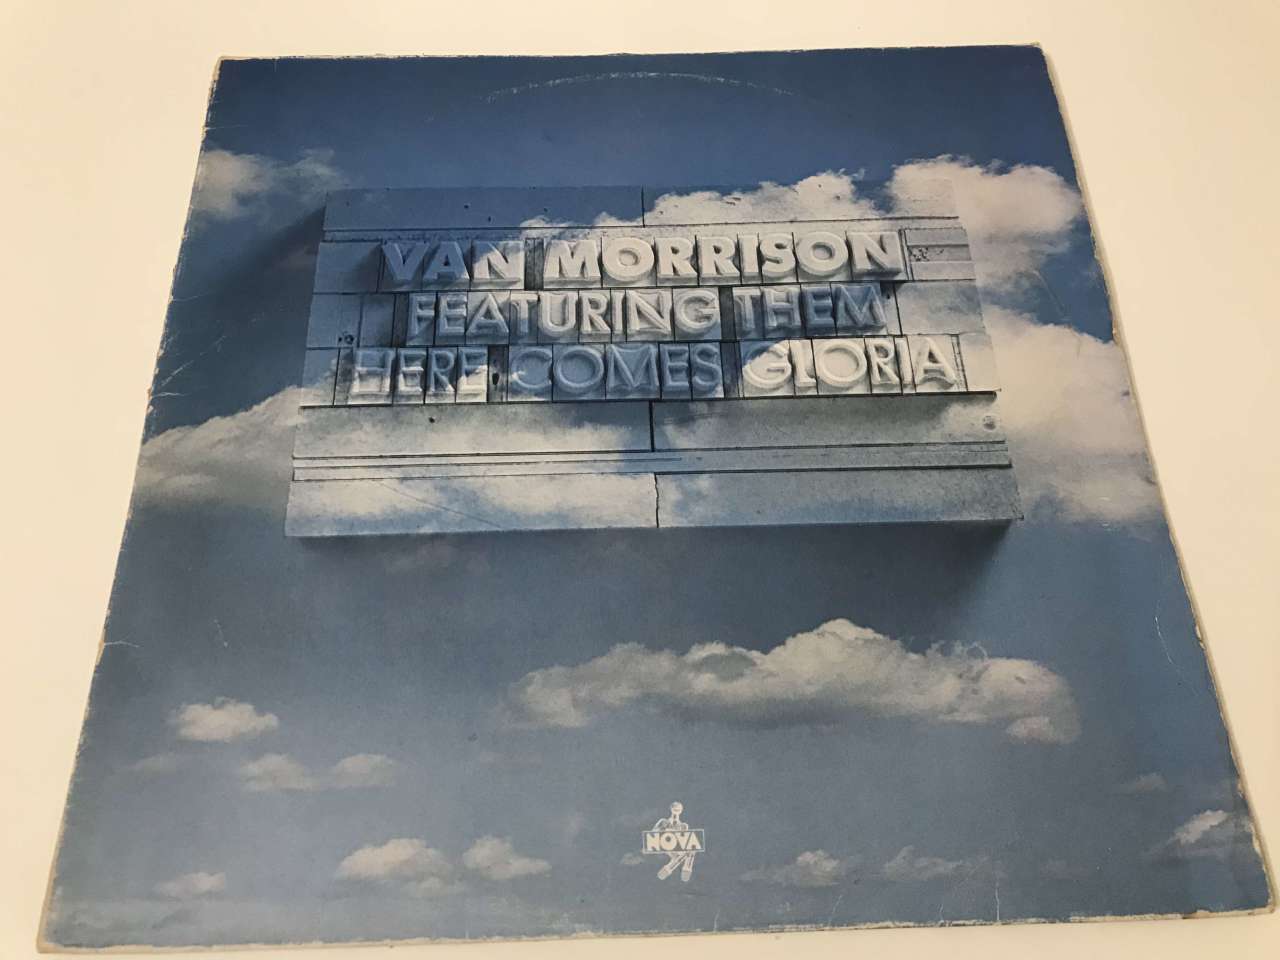 Van Morrison Featuring Them – Here Comes Gloria 2 LP